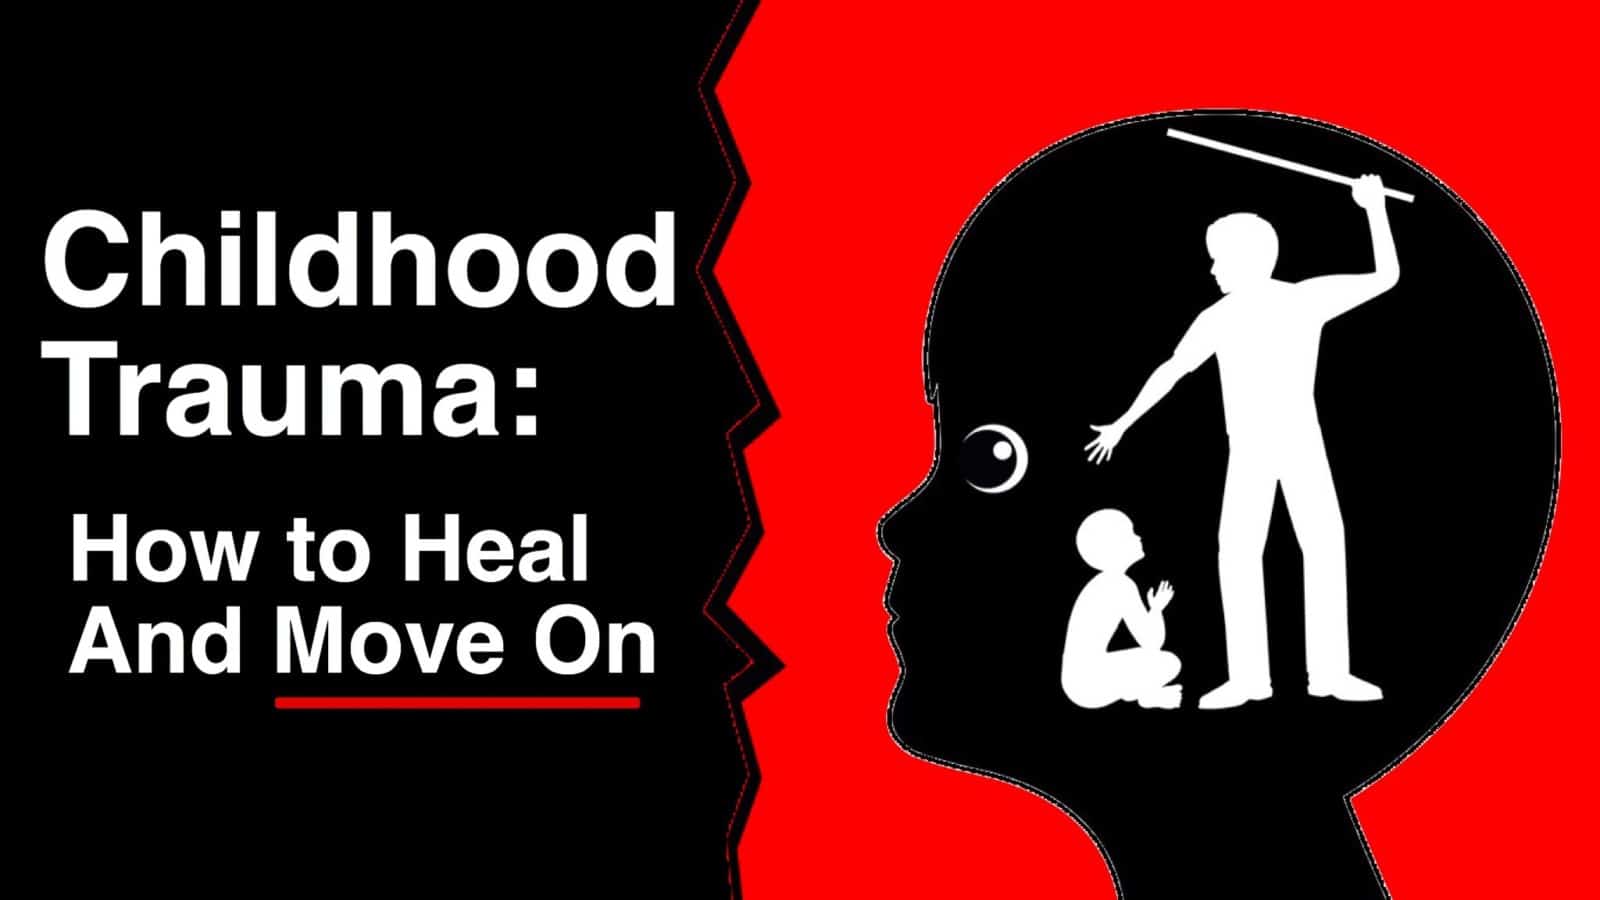 Childhood Trauma: How to Heal And Move On